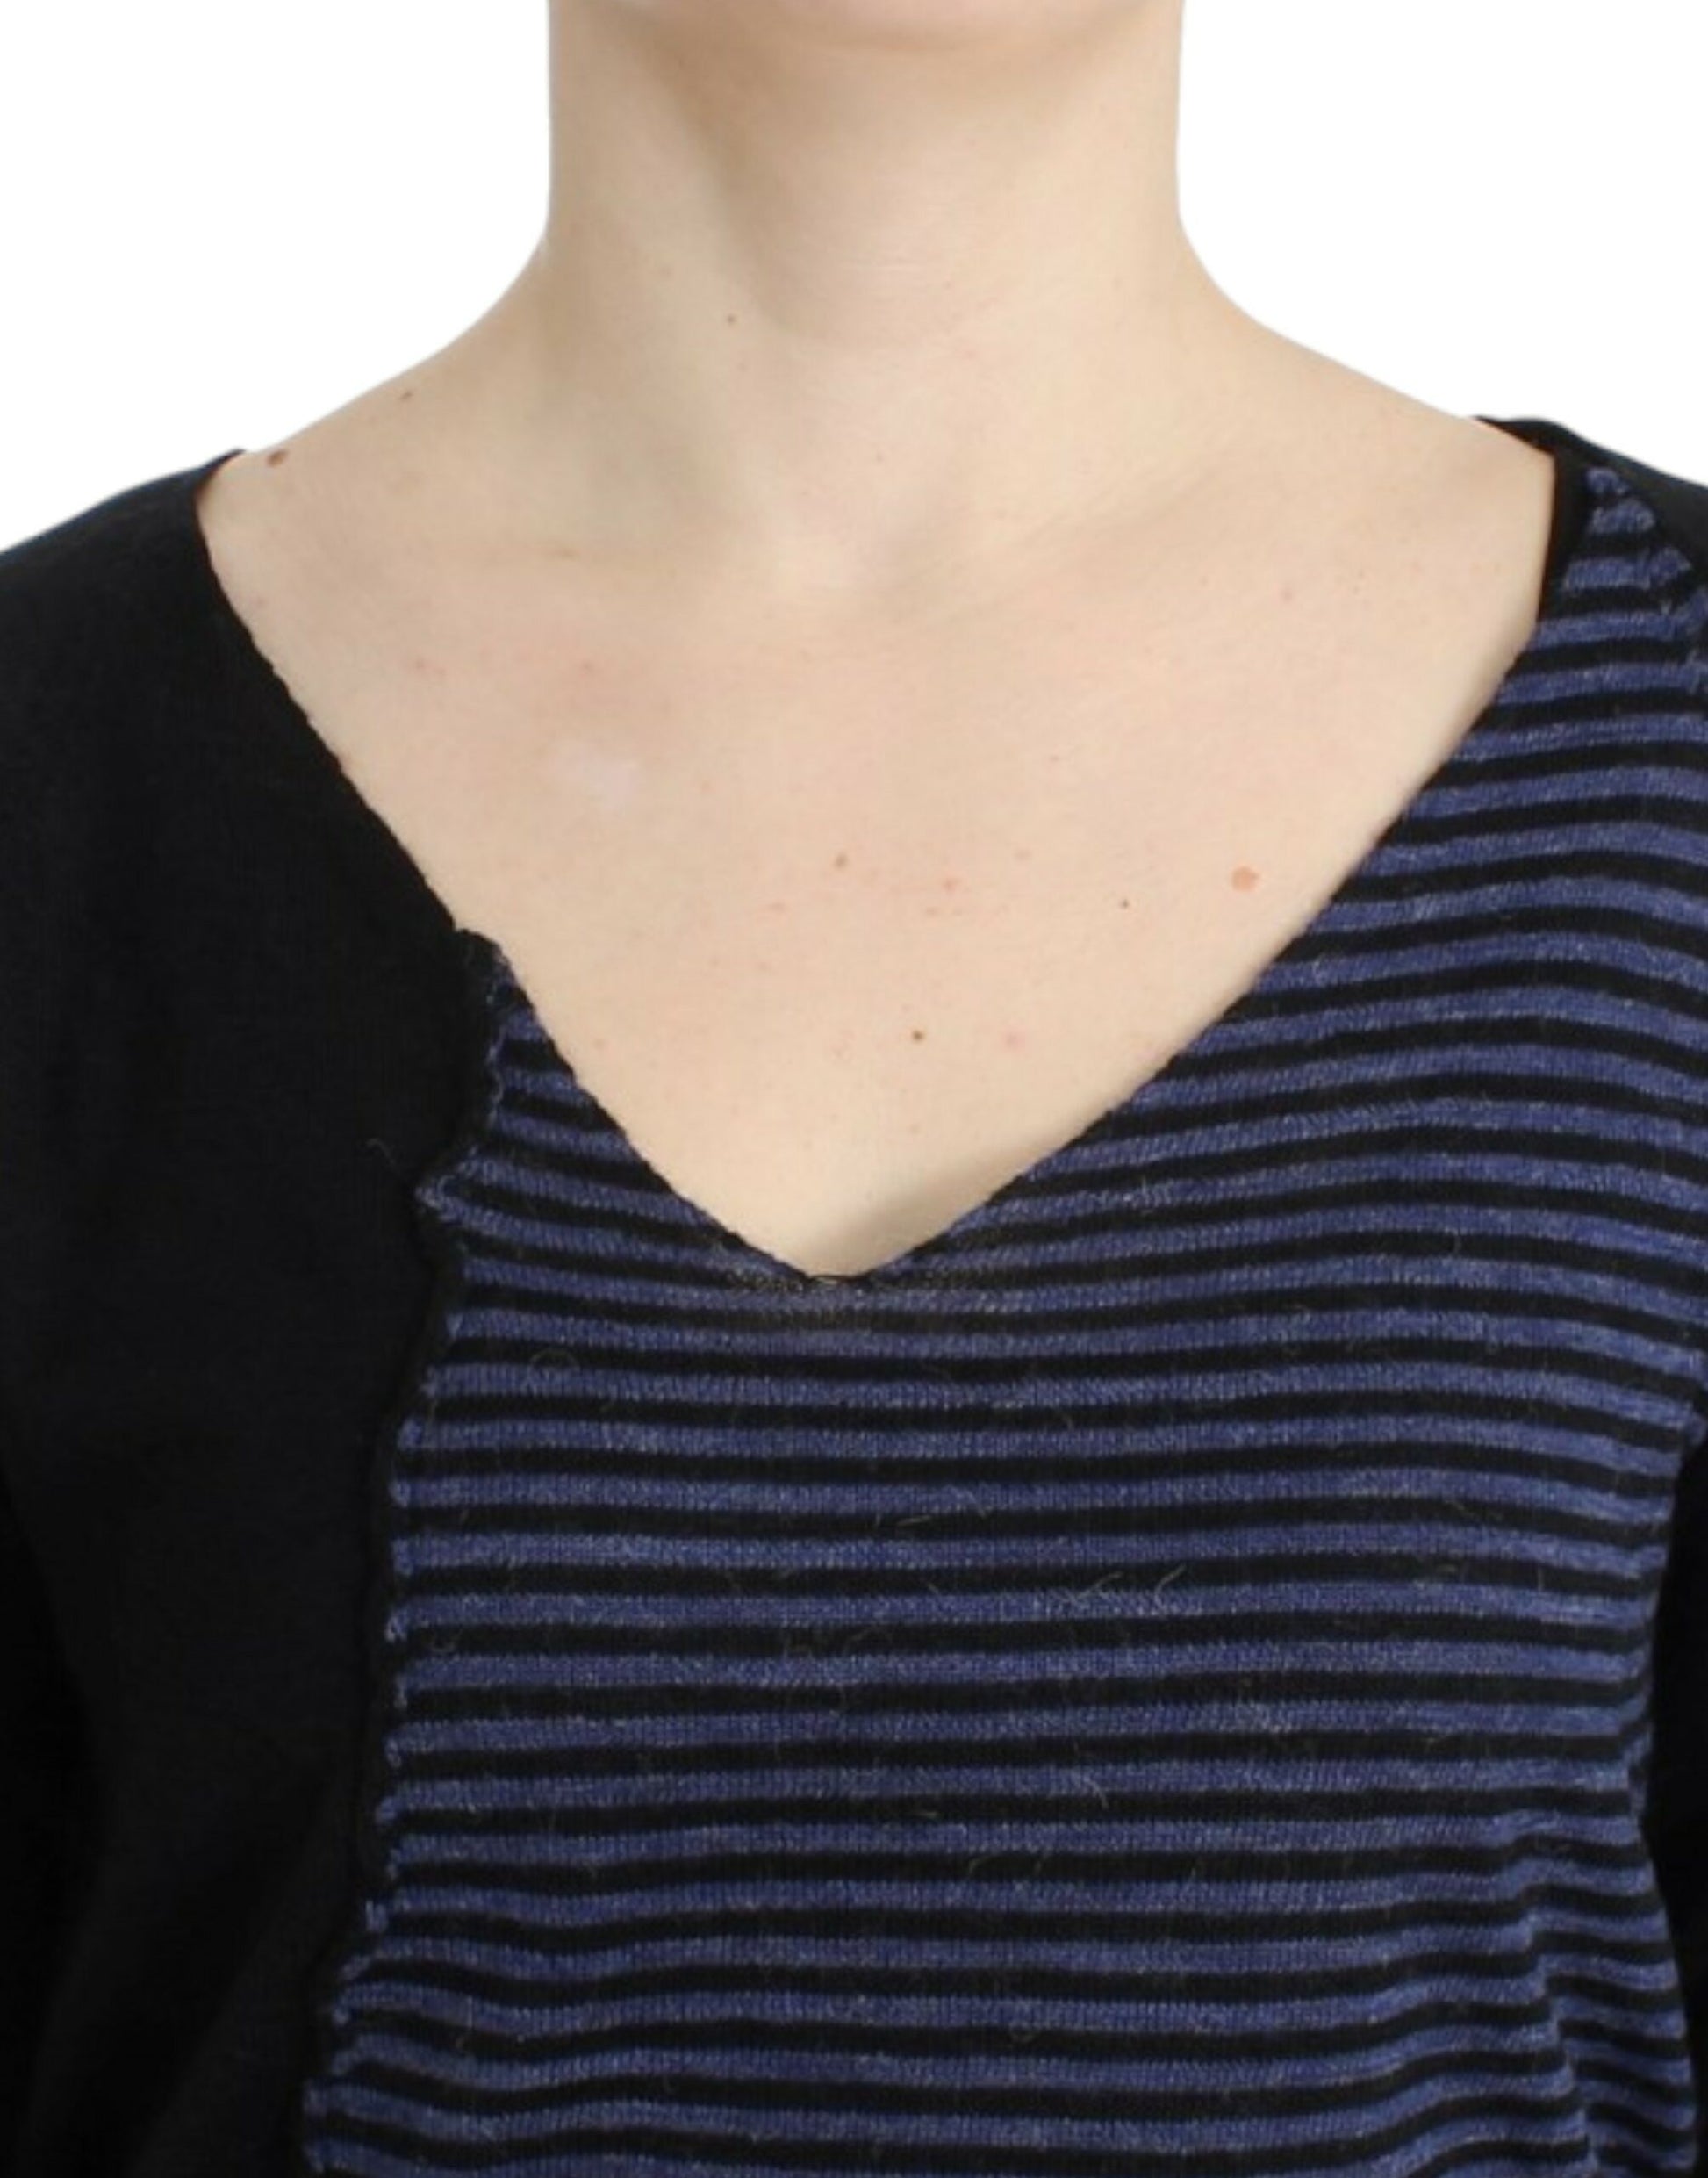 Striped V-Neck Luxury Sweater